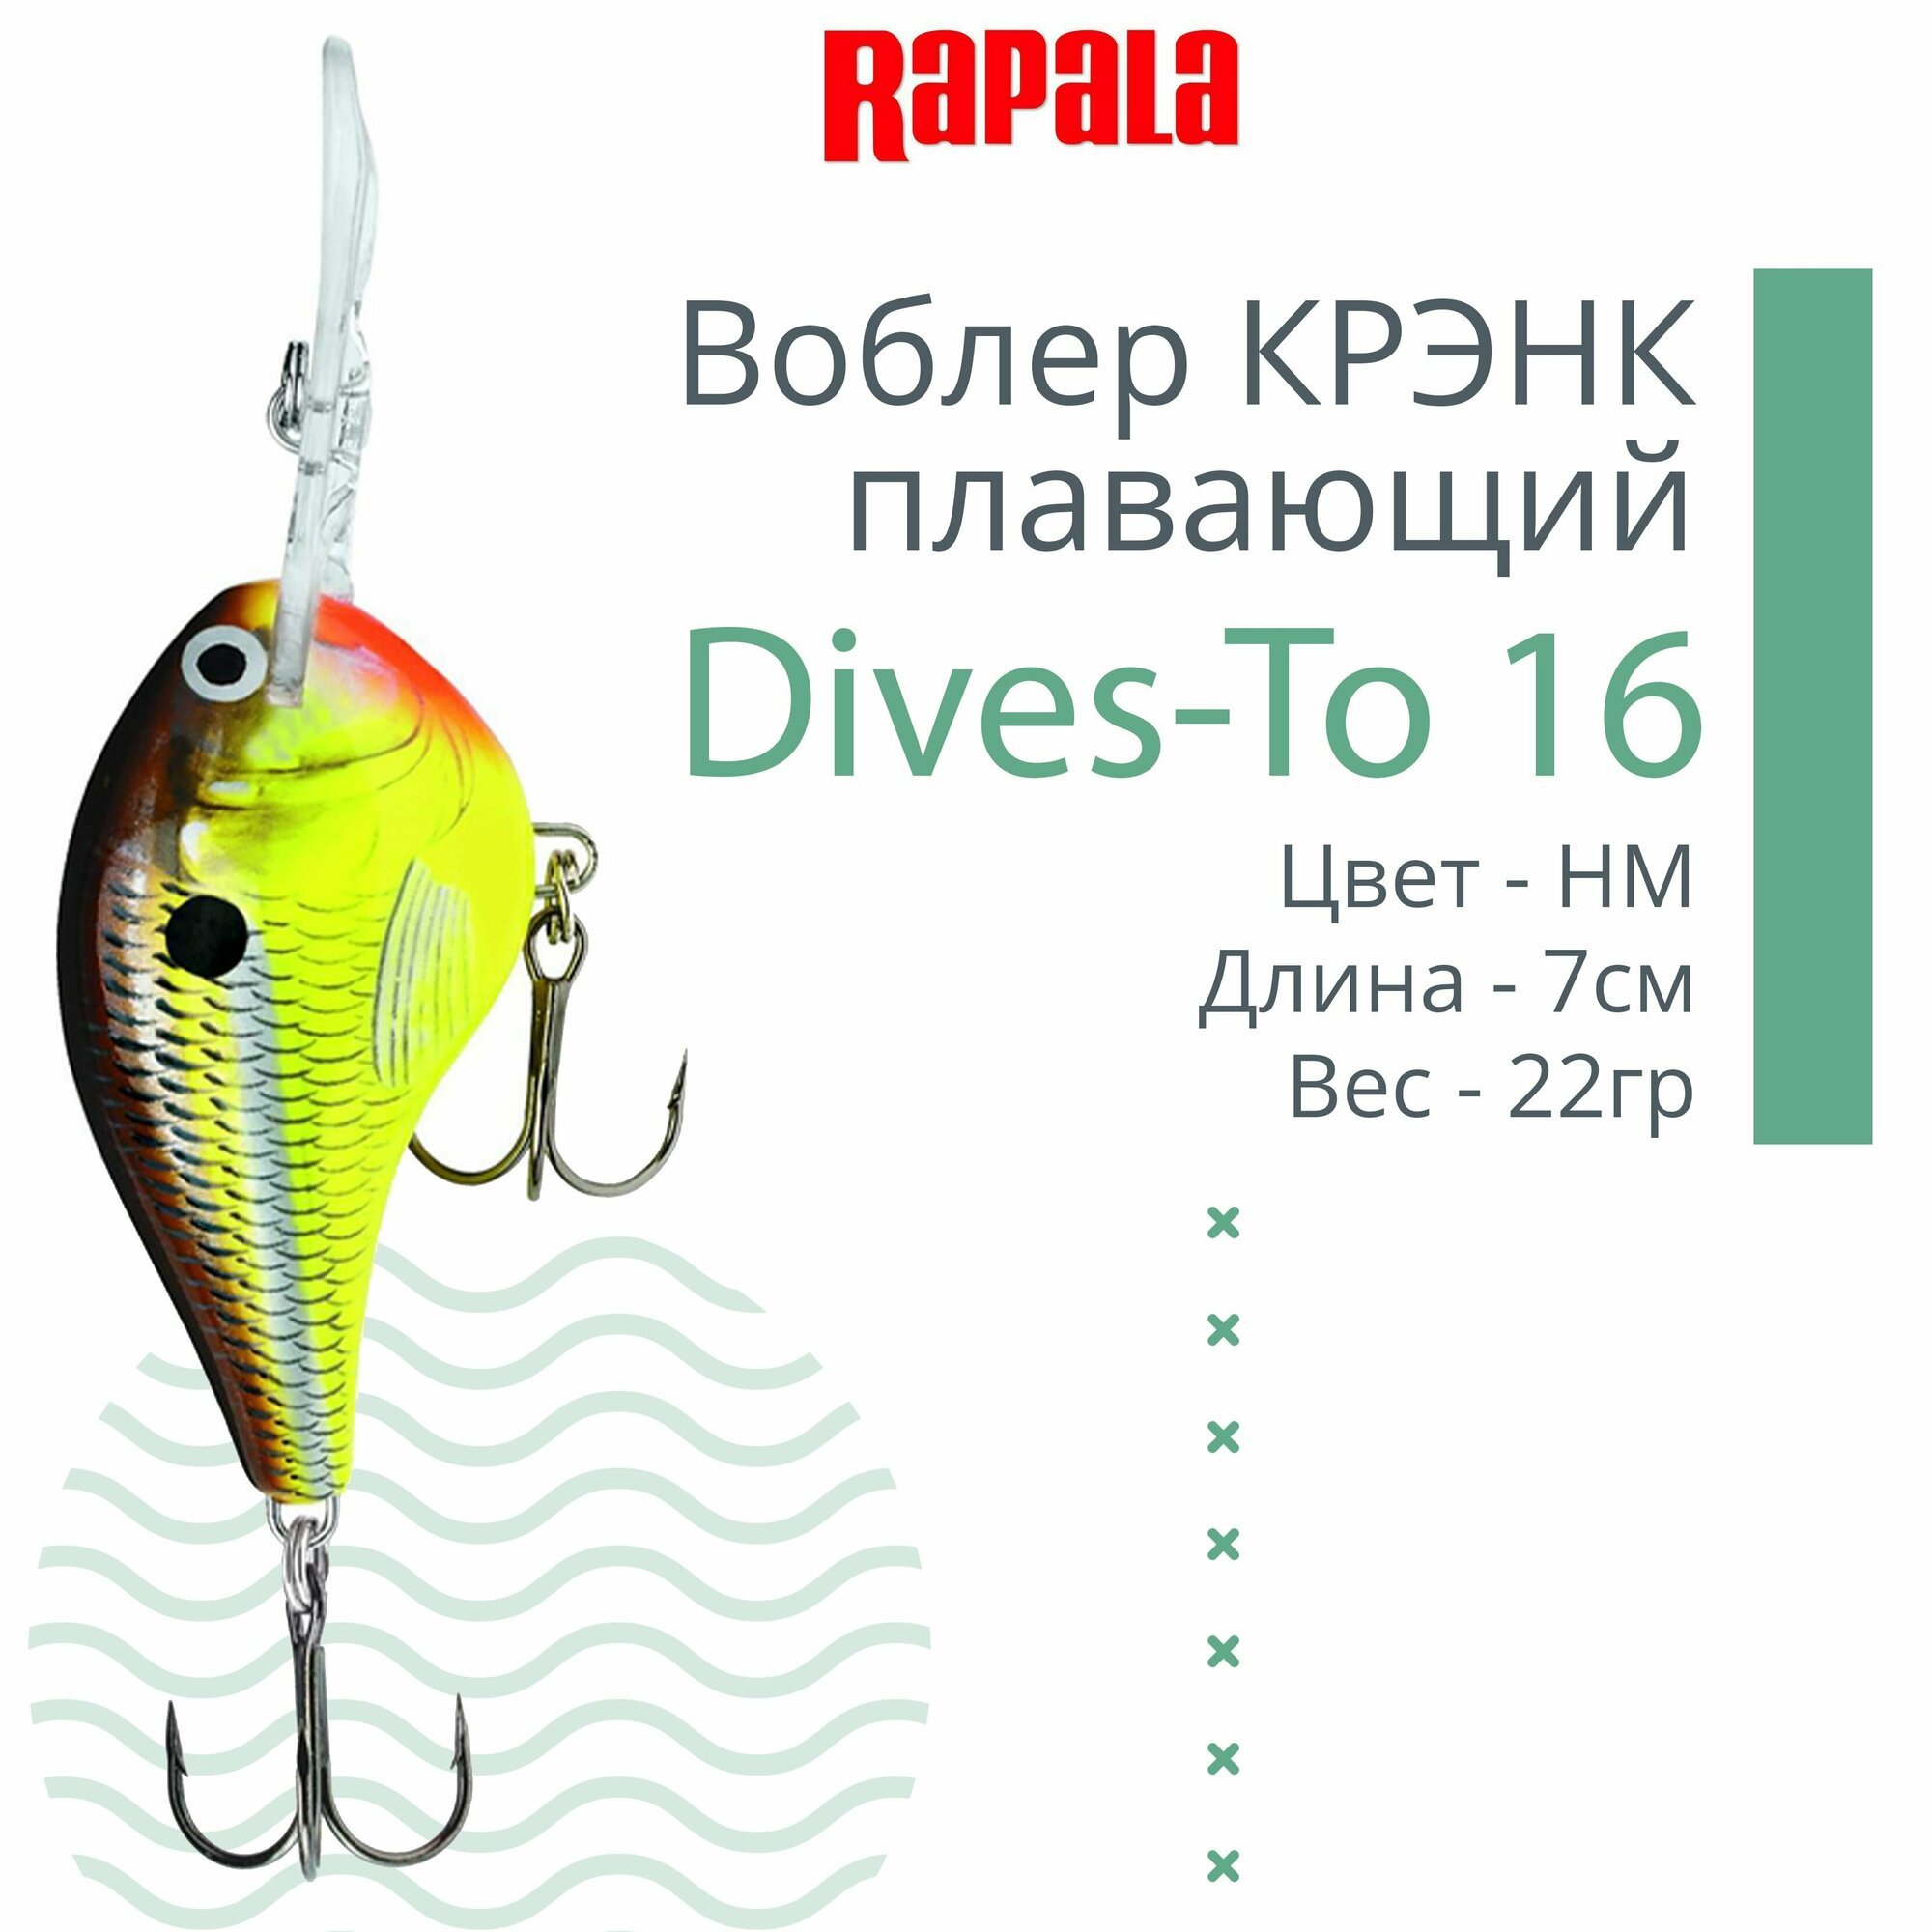 Воблер для рыбалки RAPALA Dives-To 16, 7см, 22гр, цвет HM , плавающий